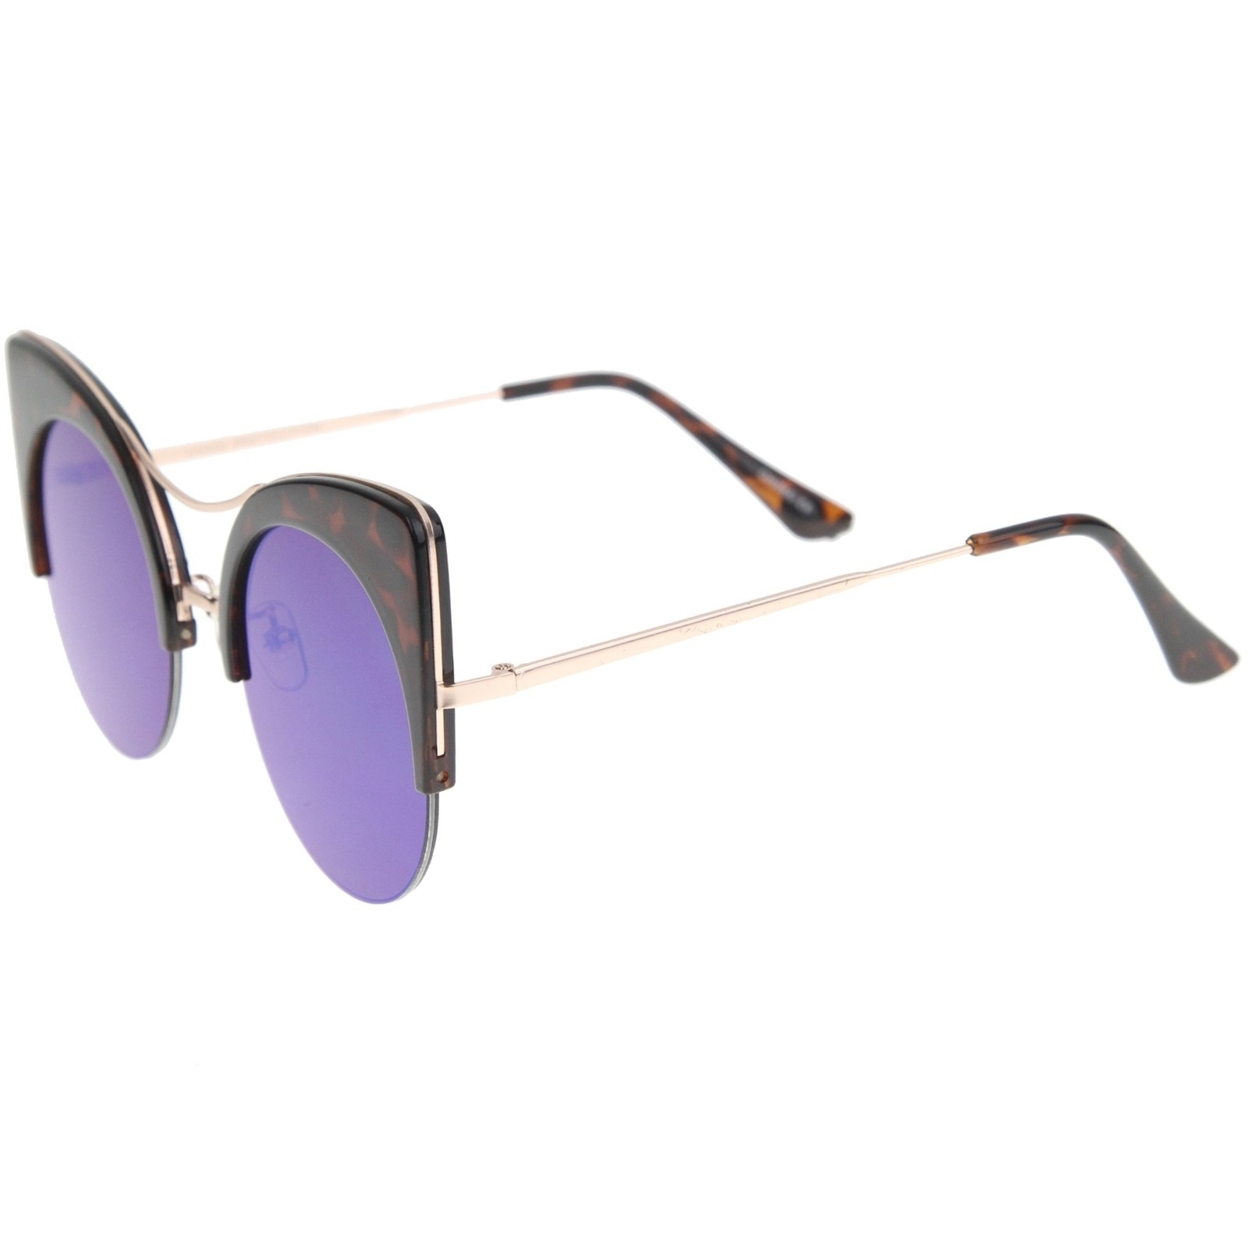 Womens Oversized Half Frame Semi-Rimless Flat Lens Round Cat Eye Sunglasses 60mm - White-Gold / Ice